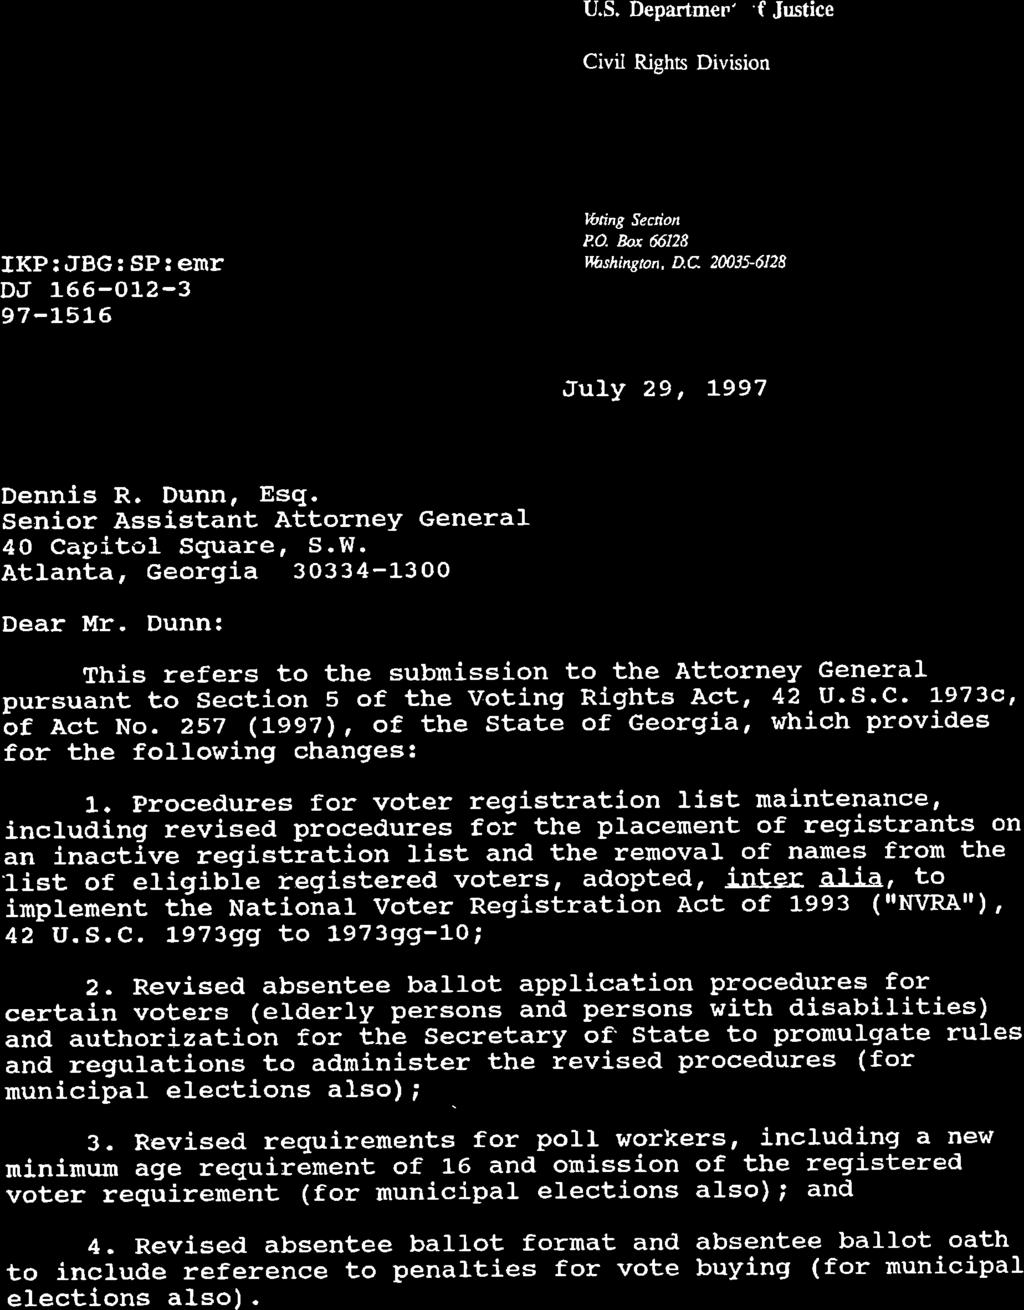 Case 1:16-cv-00452-TCB Document